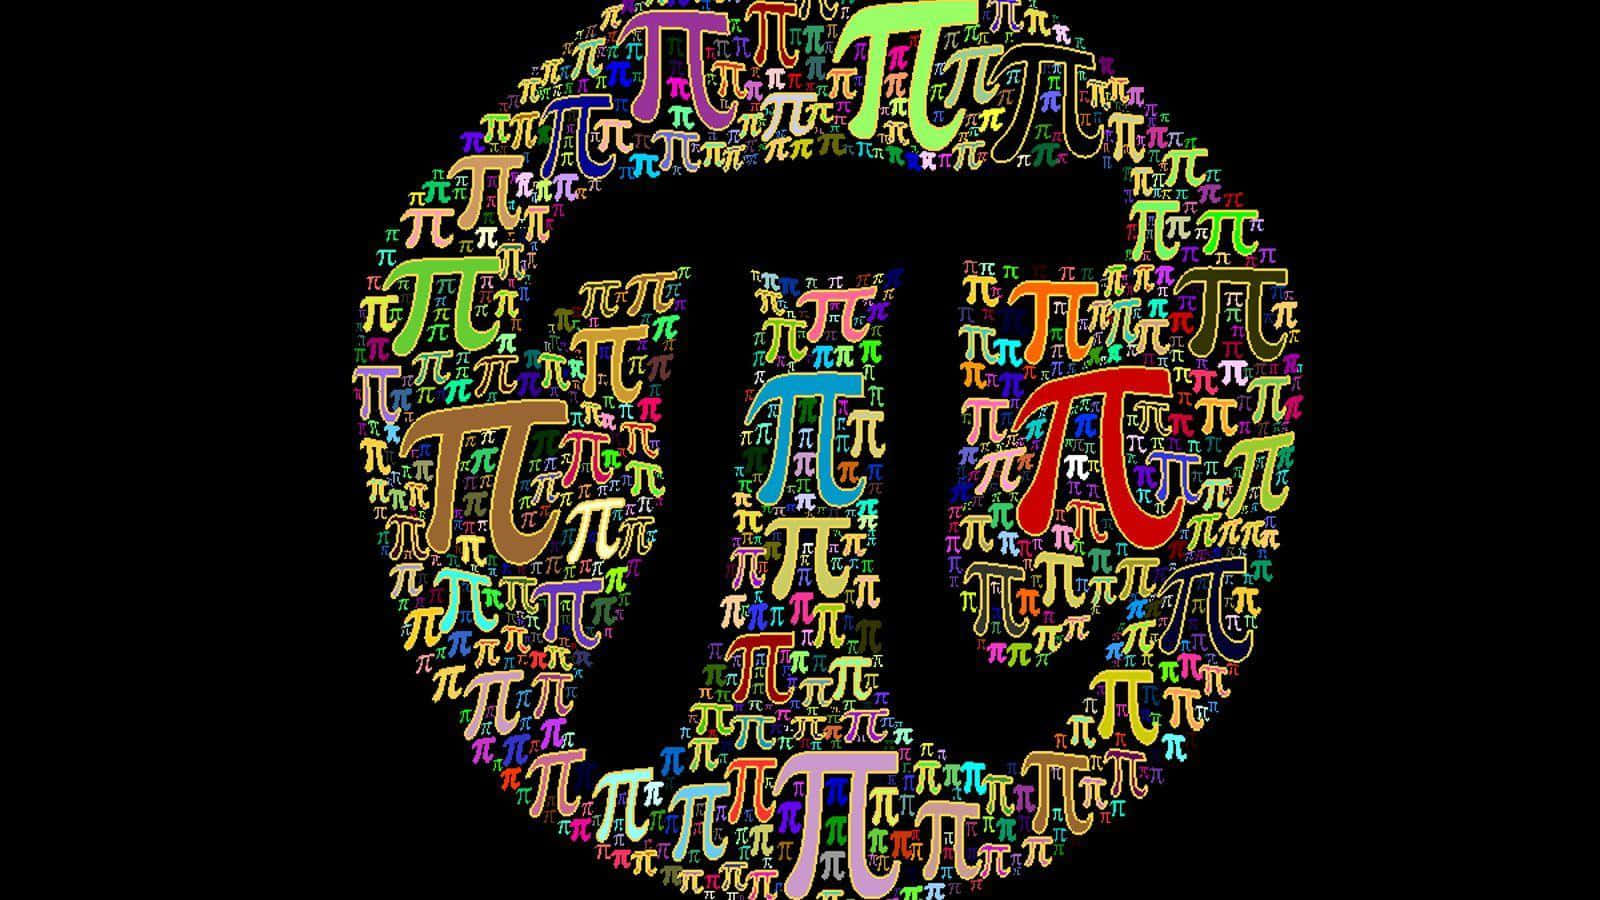 Díade Pi (referring To The Mathematical Constant 